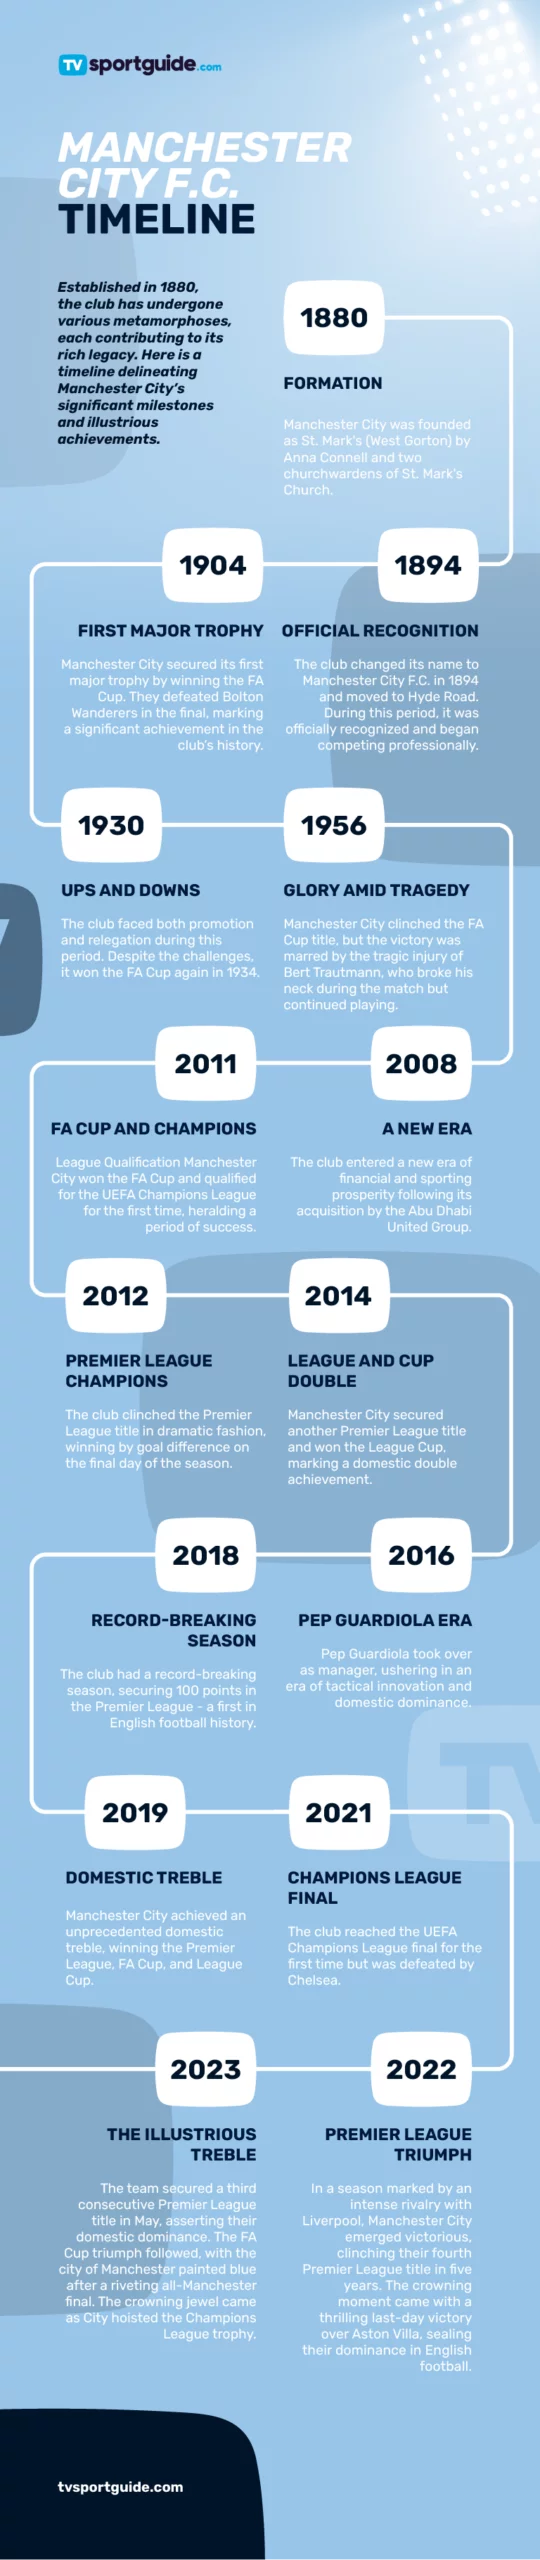 Manchester City F.C. timeline